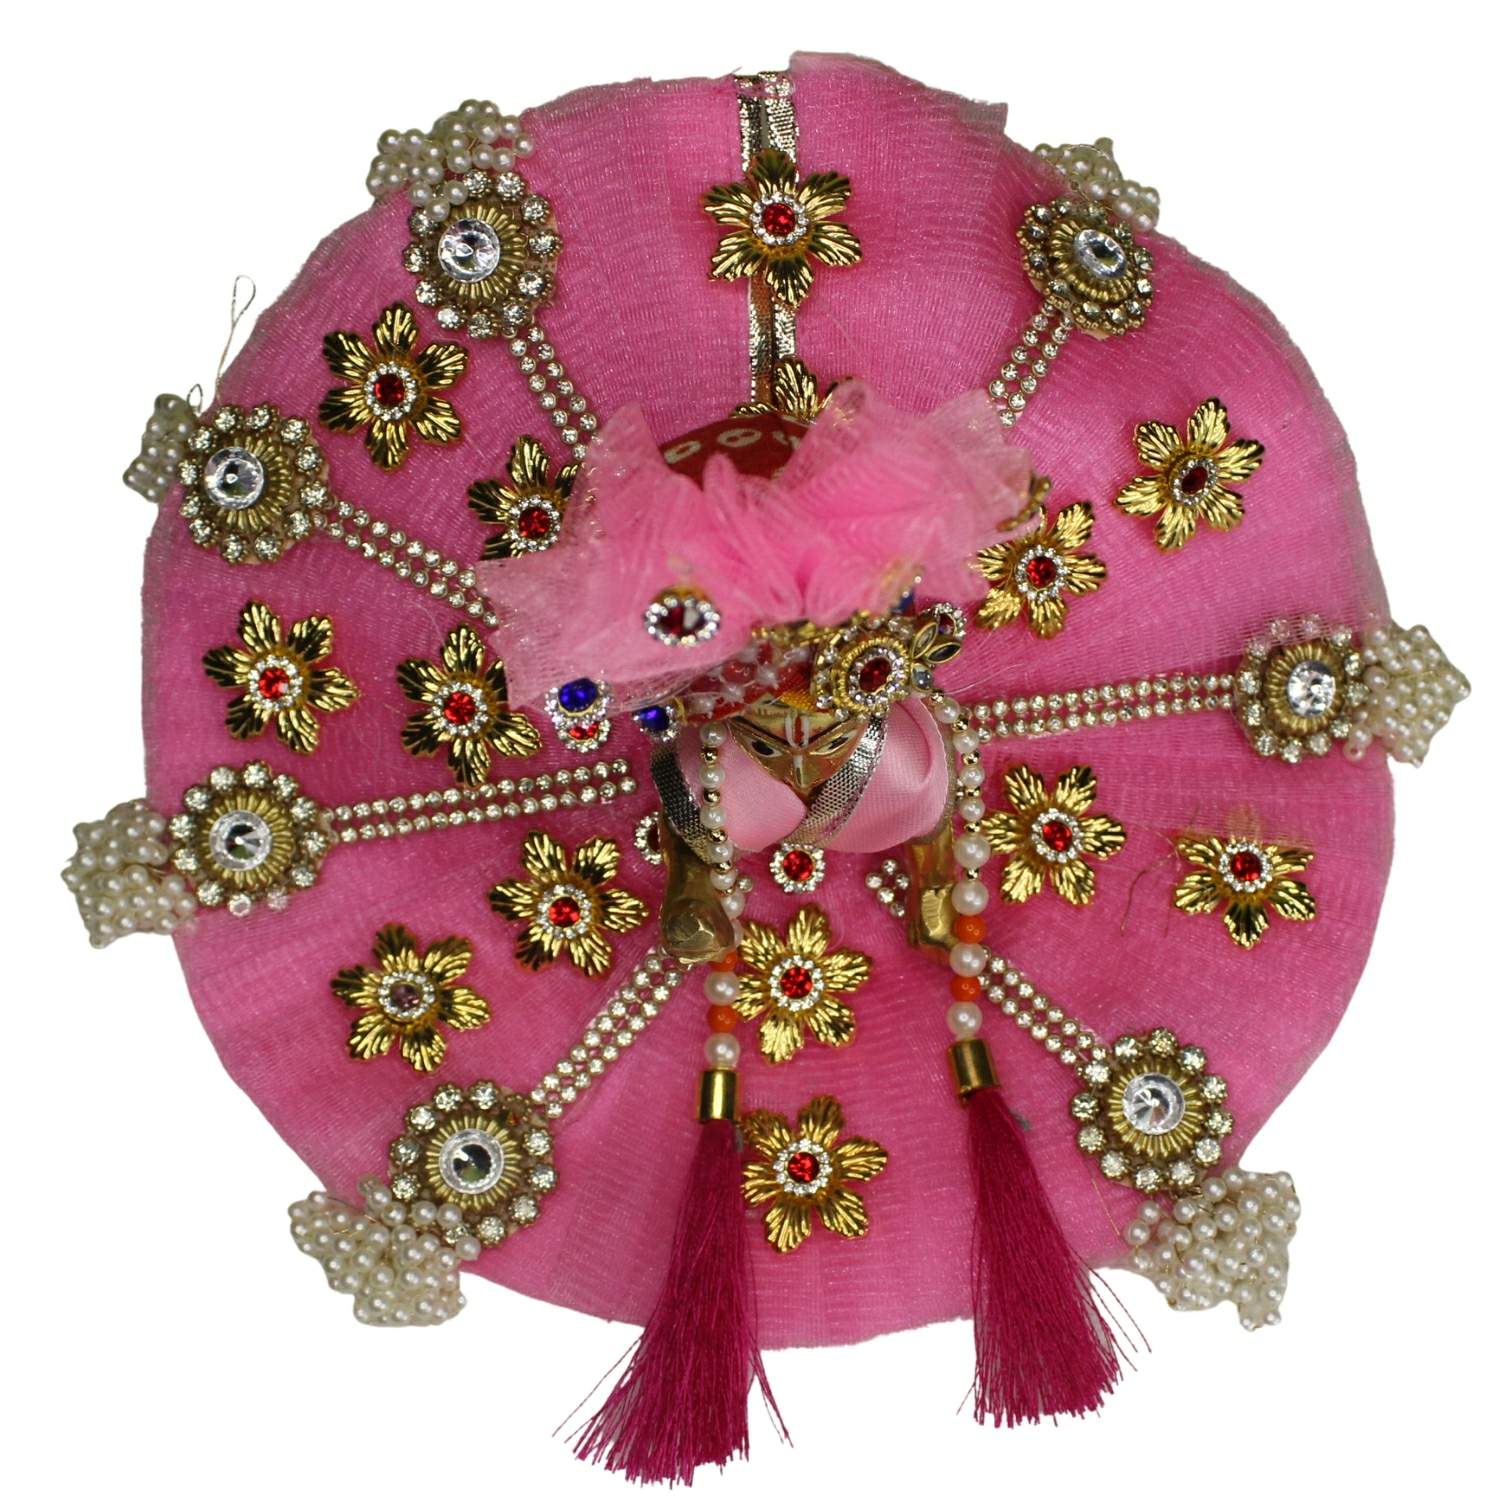 Thakur Ji Pink Dress,rajasthan Design Krishna Dress,handmade Laddu Gopal Ji  Dress,janmashtmi Special Dress,balgopal Dress - Etsy